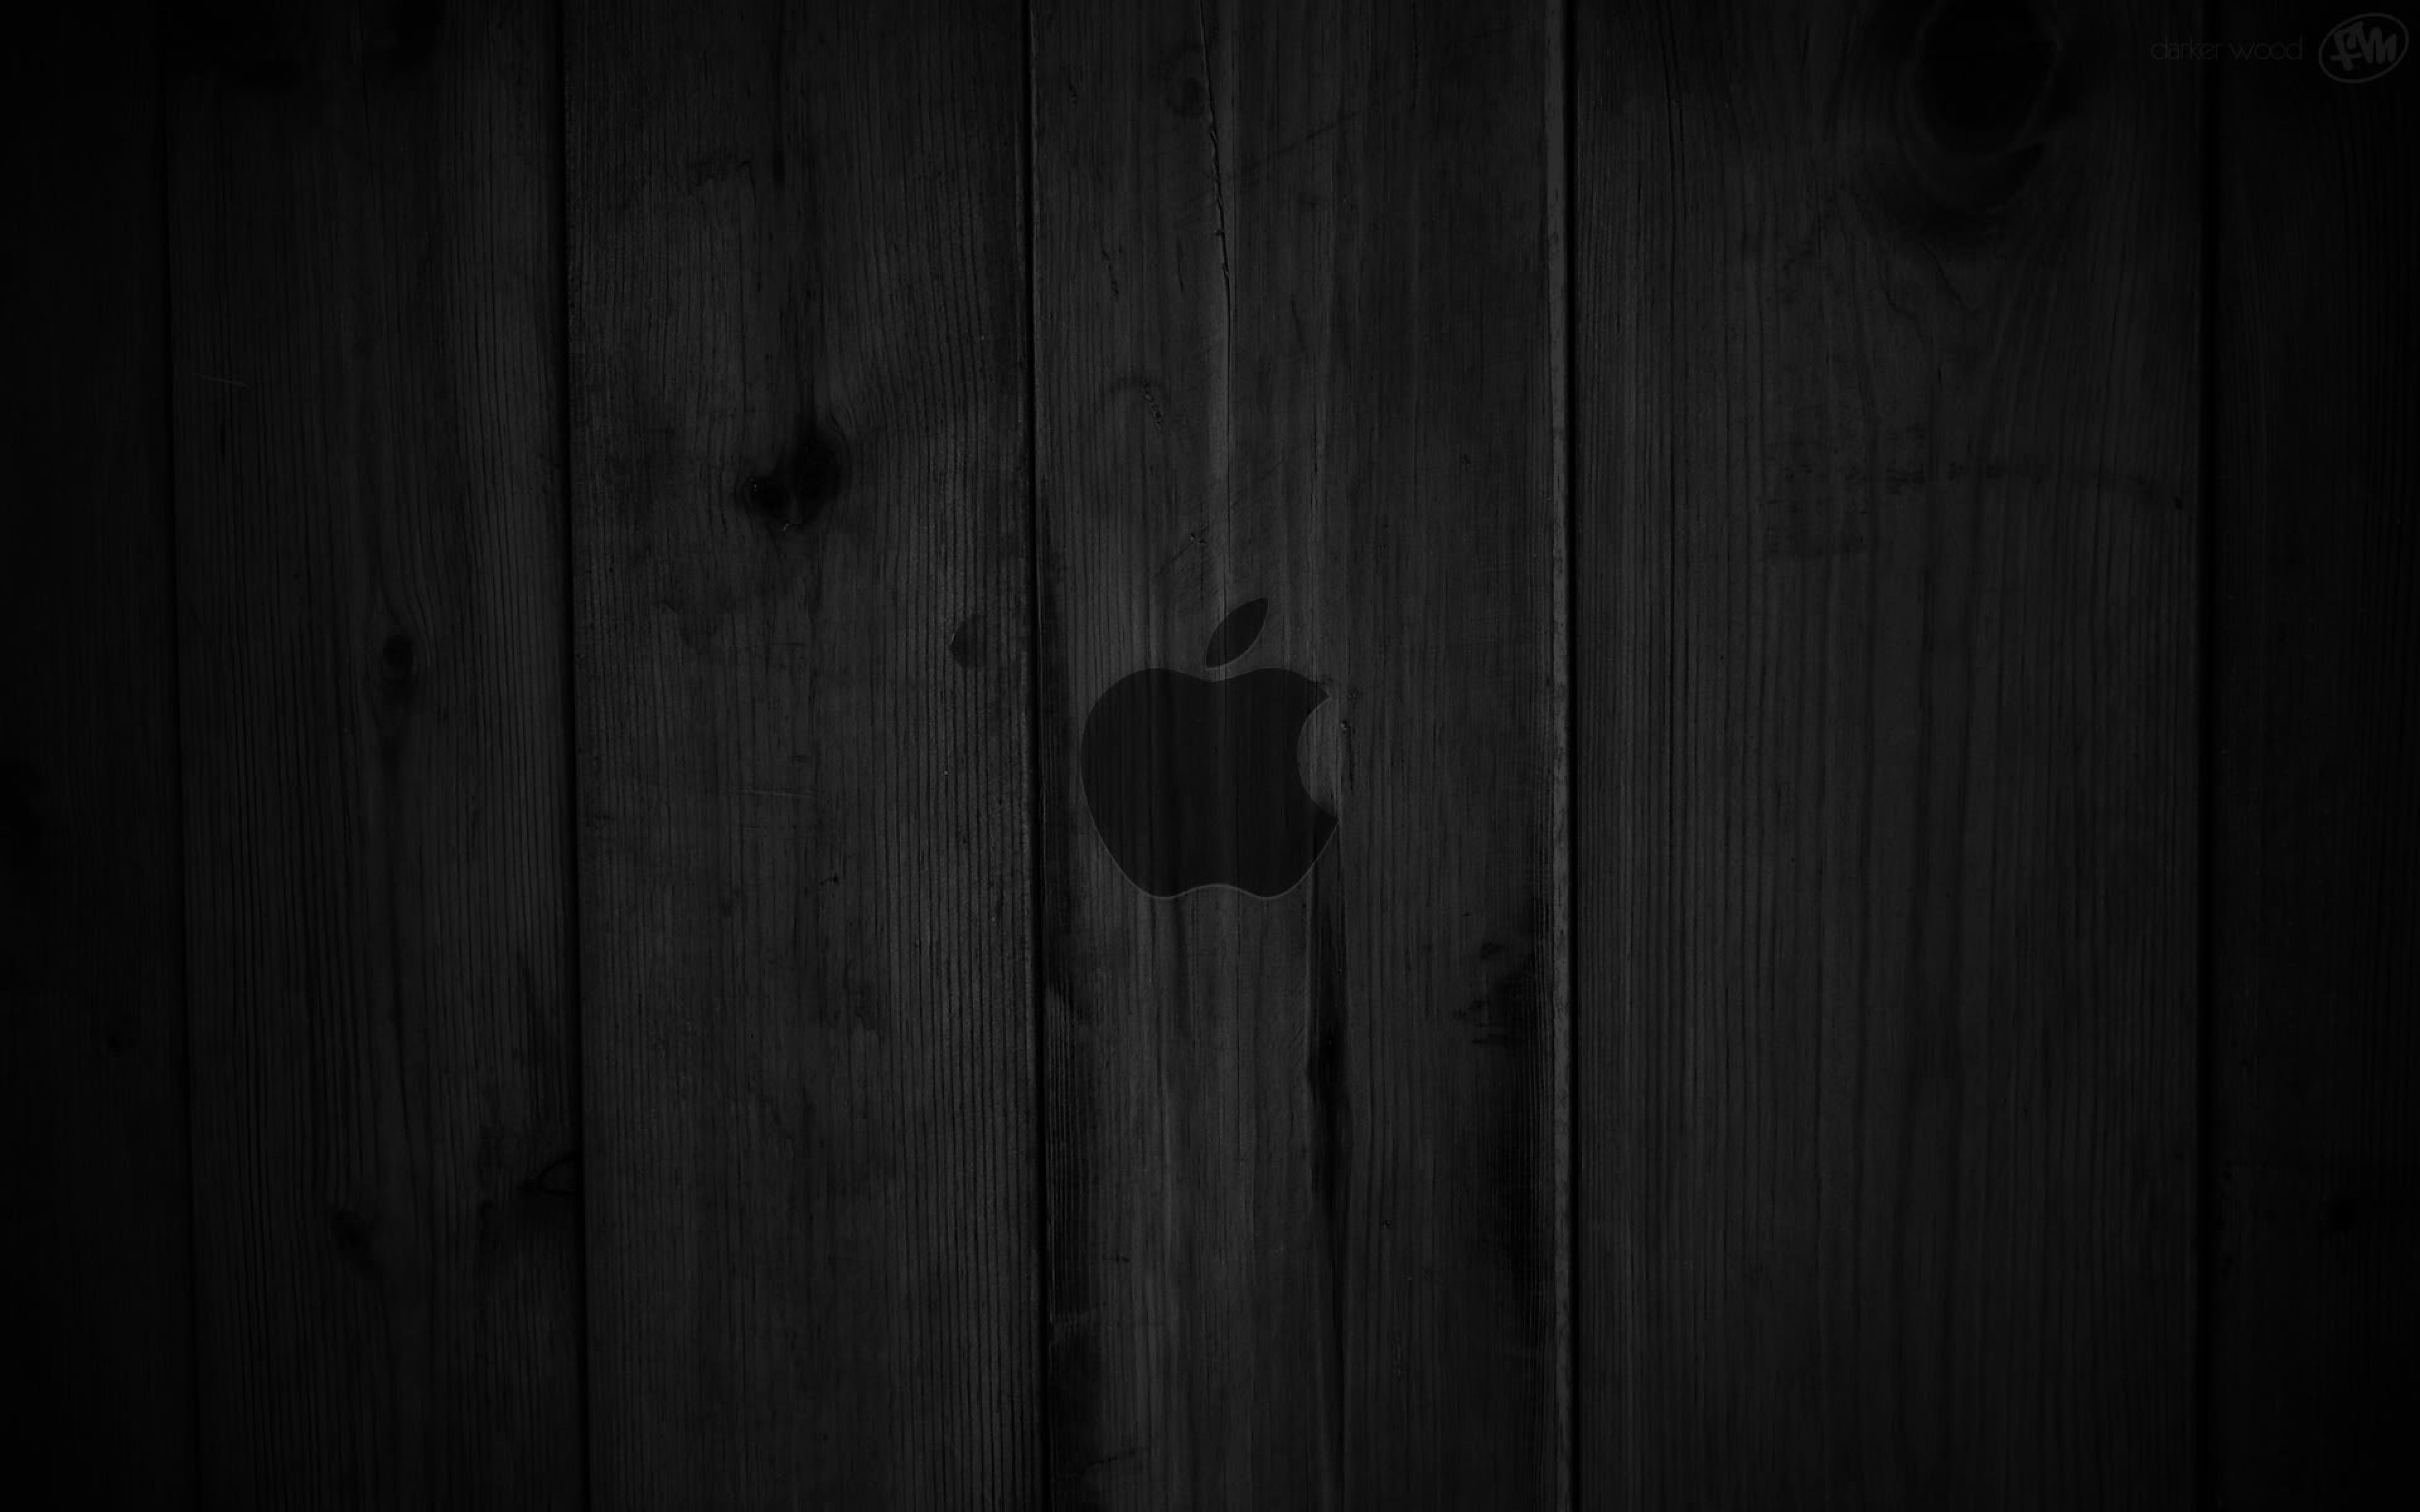 Apple Wood Wallpaper